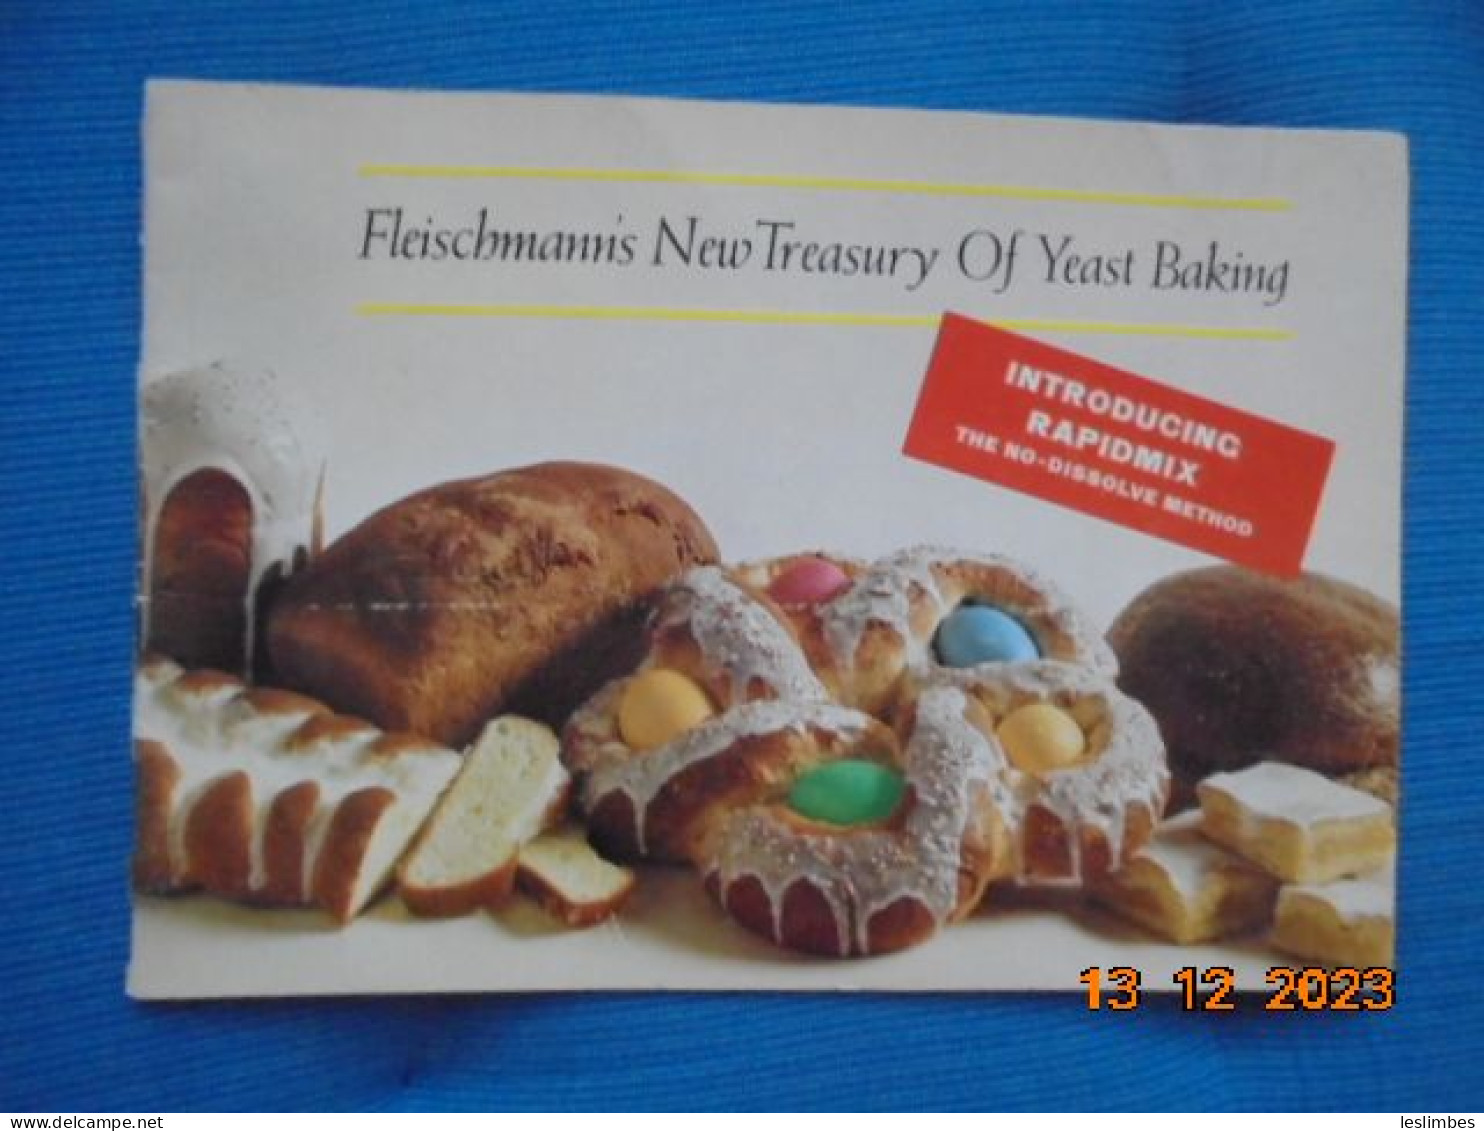 Fleischmann's New Treasury Of Yeast Baking : Introducing Rapidmix The No-Dissolve Method 1968 - Américaine